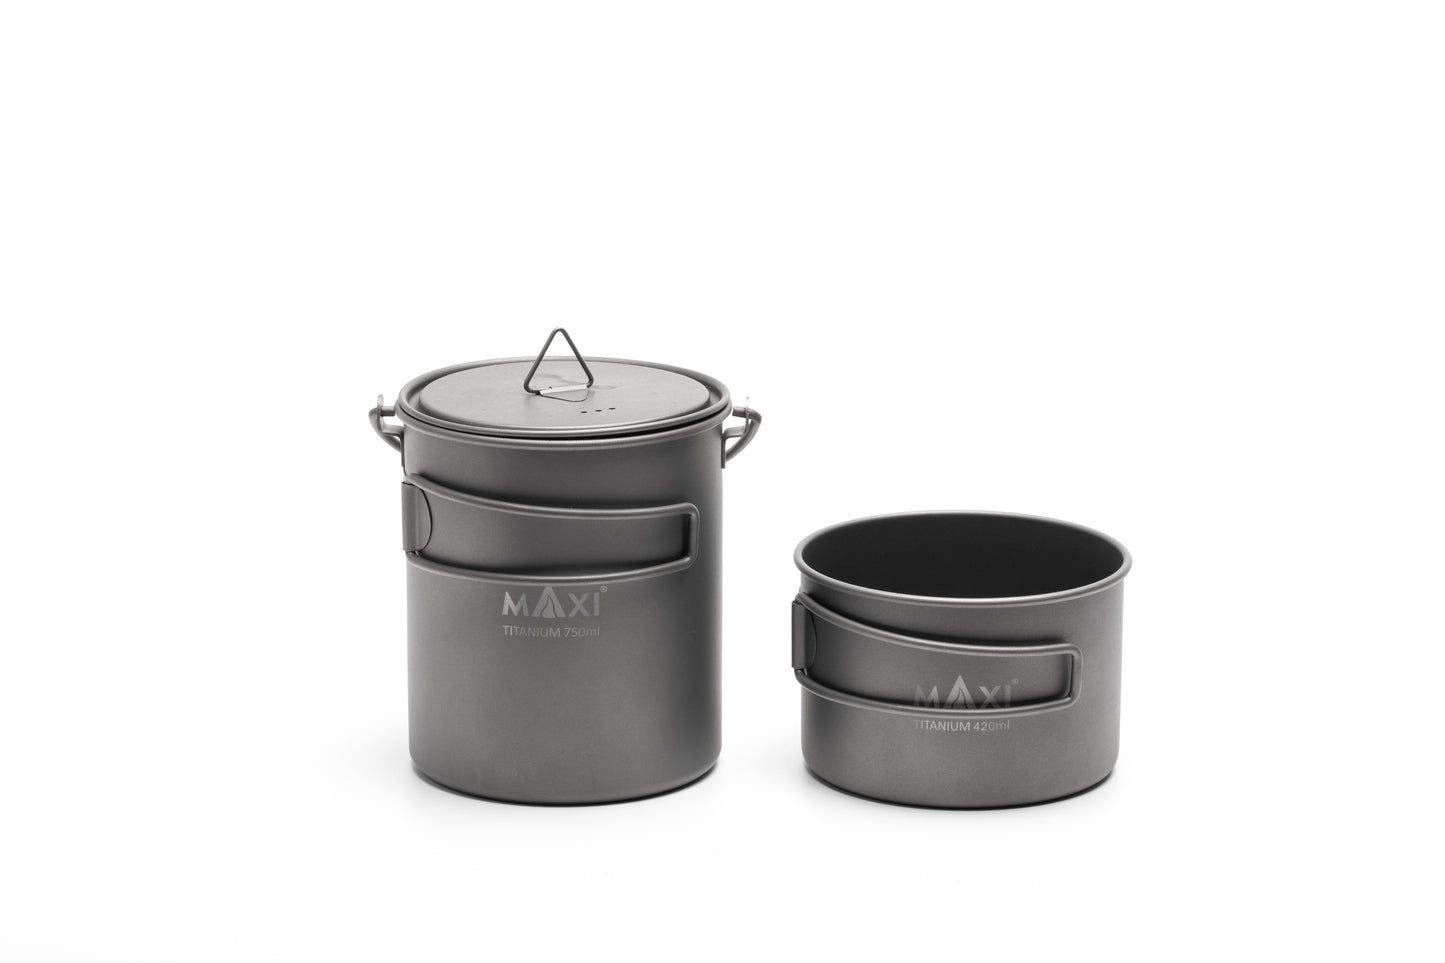 Titanium 420-750 Dual Pot with Bail Handle